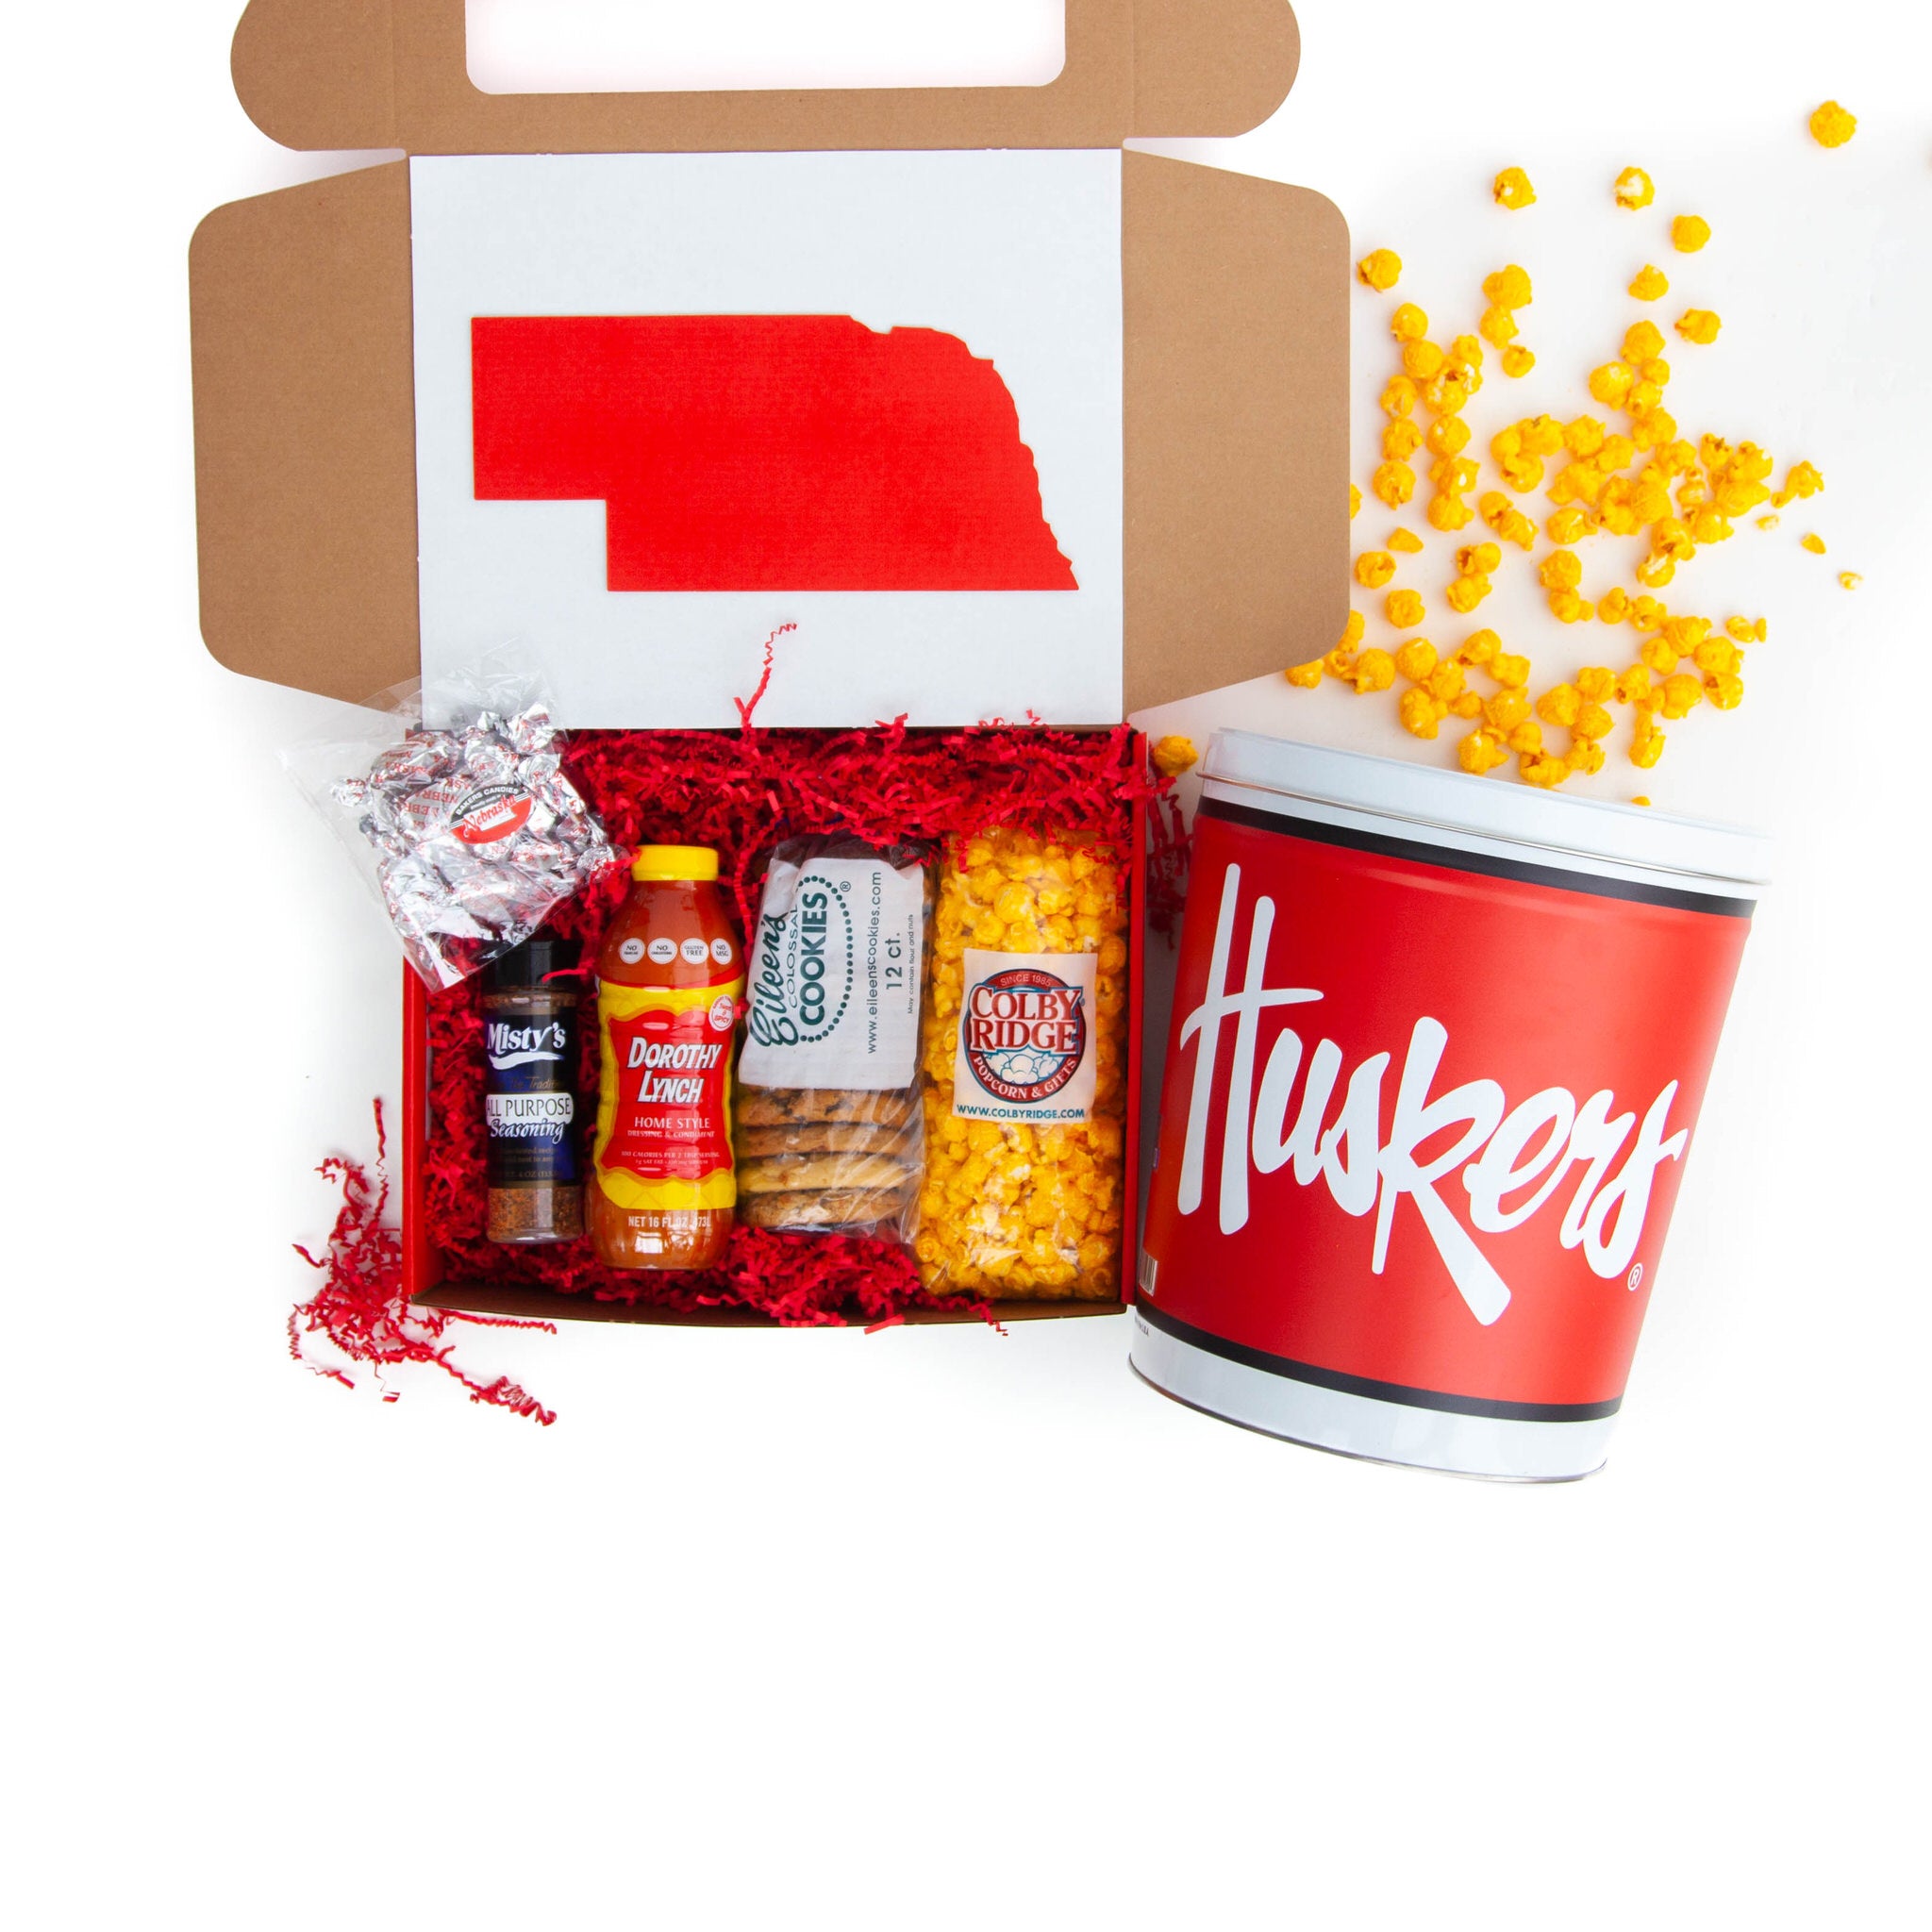 Too Cute Gift Box 4-Pack - Colby Ridge Popcorn